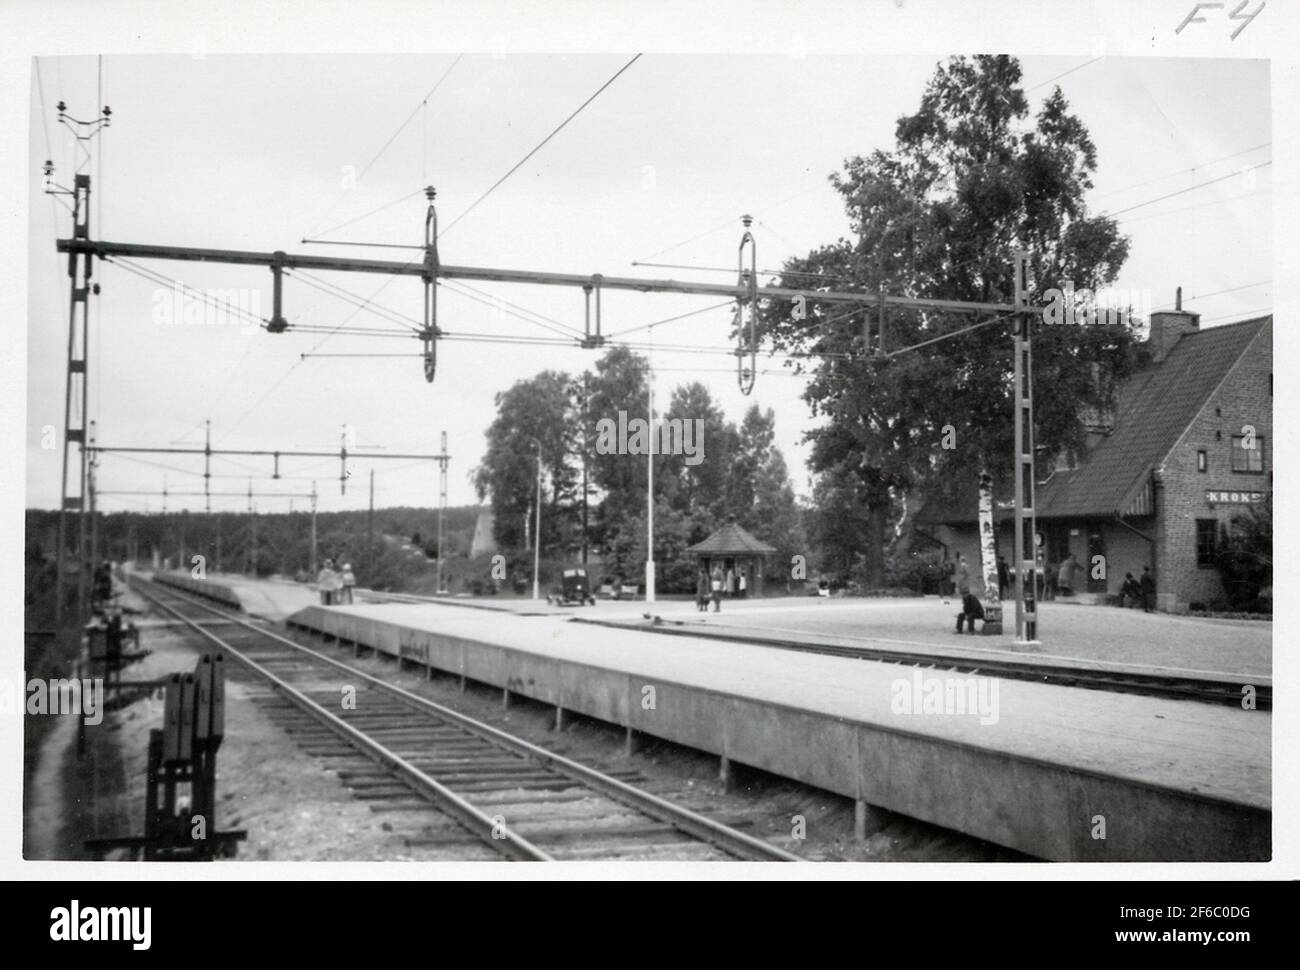 Crockey station. Stock Photo